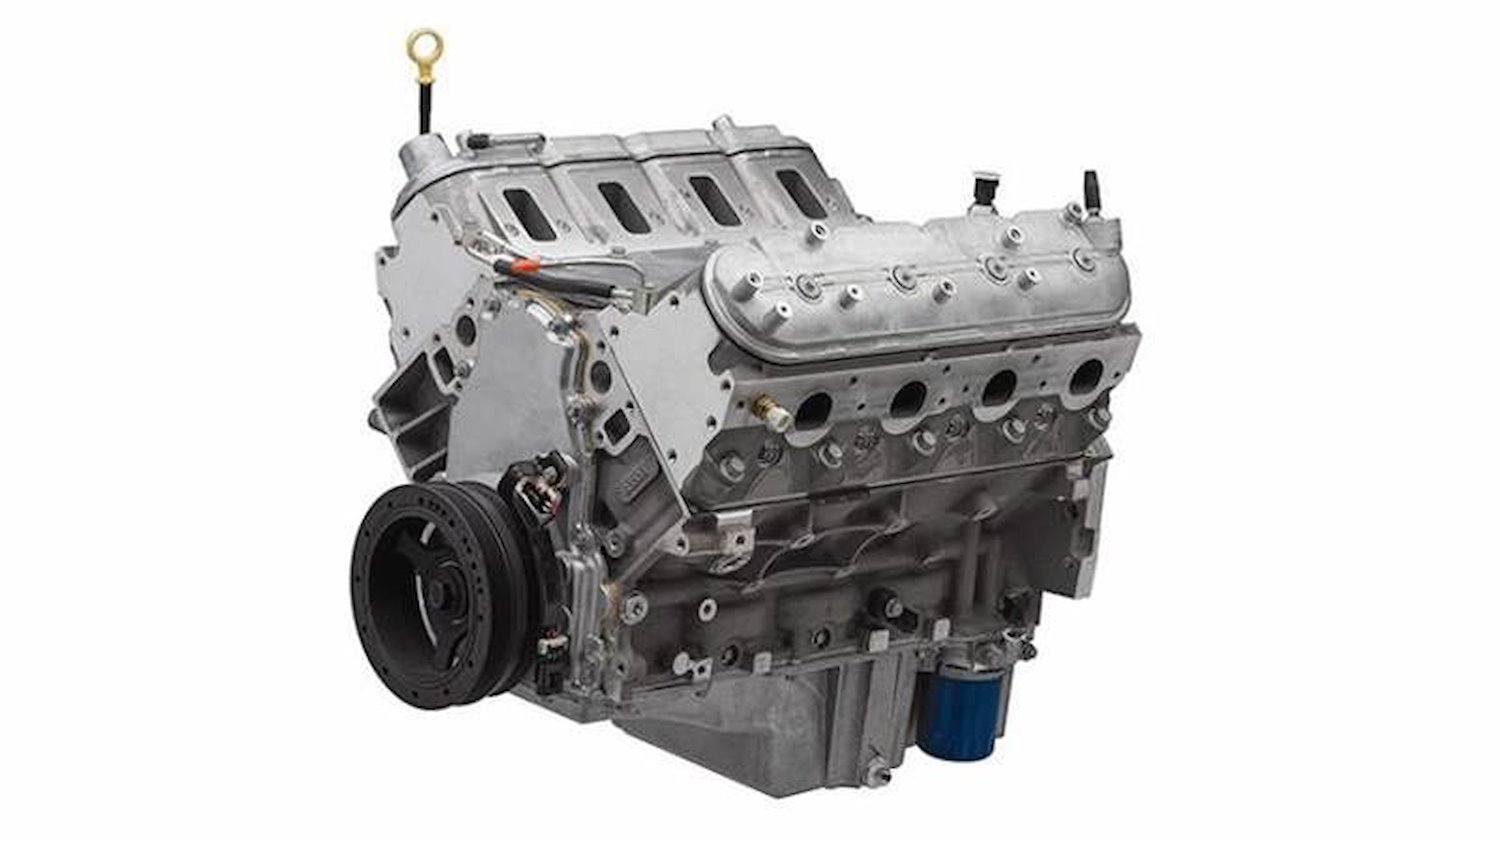 19435108 LS376/480 Base Crate (Long Block) Engine LS3 6.2L (376 ci.) w/Racing-Inspired LS Hot Cam [495 HP @ 6200 RPM]